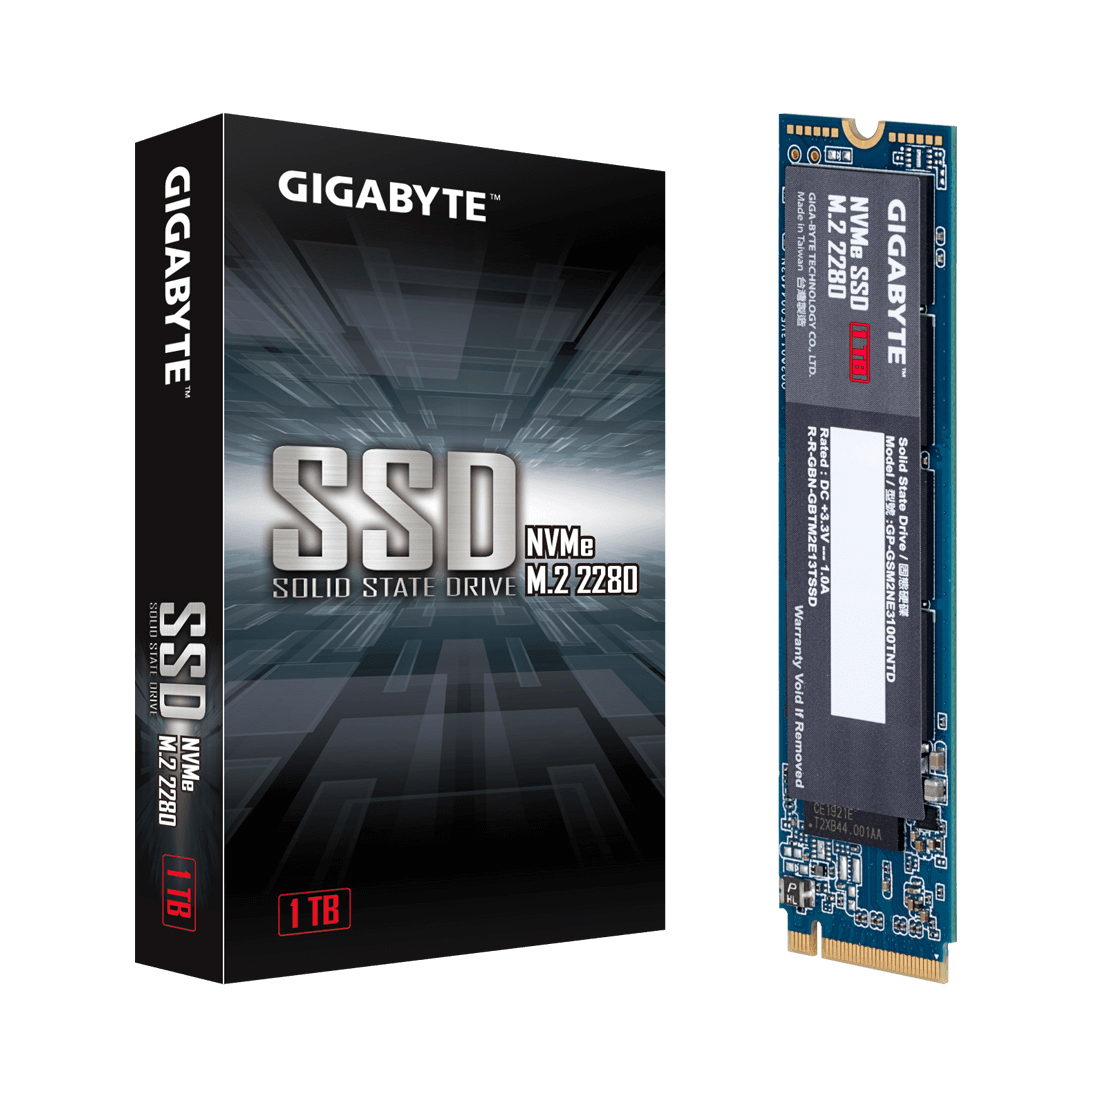 картинка Твердотельный накопитель SSD Gigabyte GP-GSM2NE3100TNTD 1TB M.2 PCI-E 3.0x4 от магазина itmag.kz